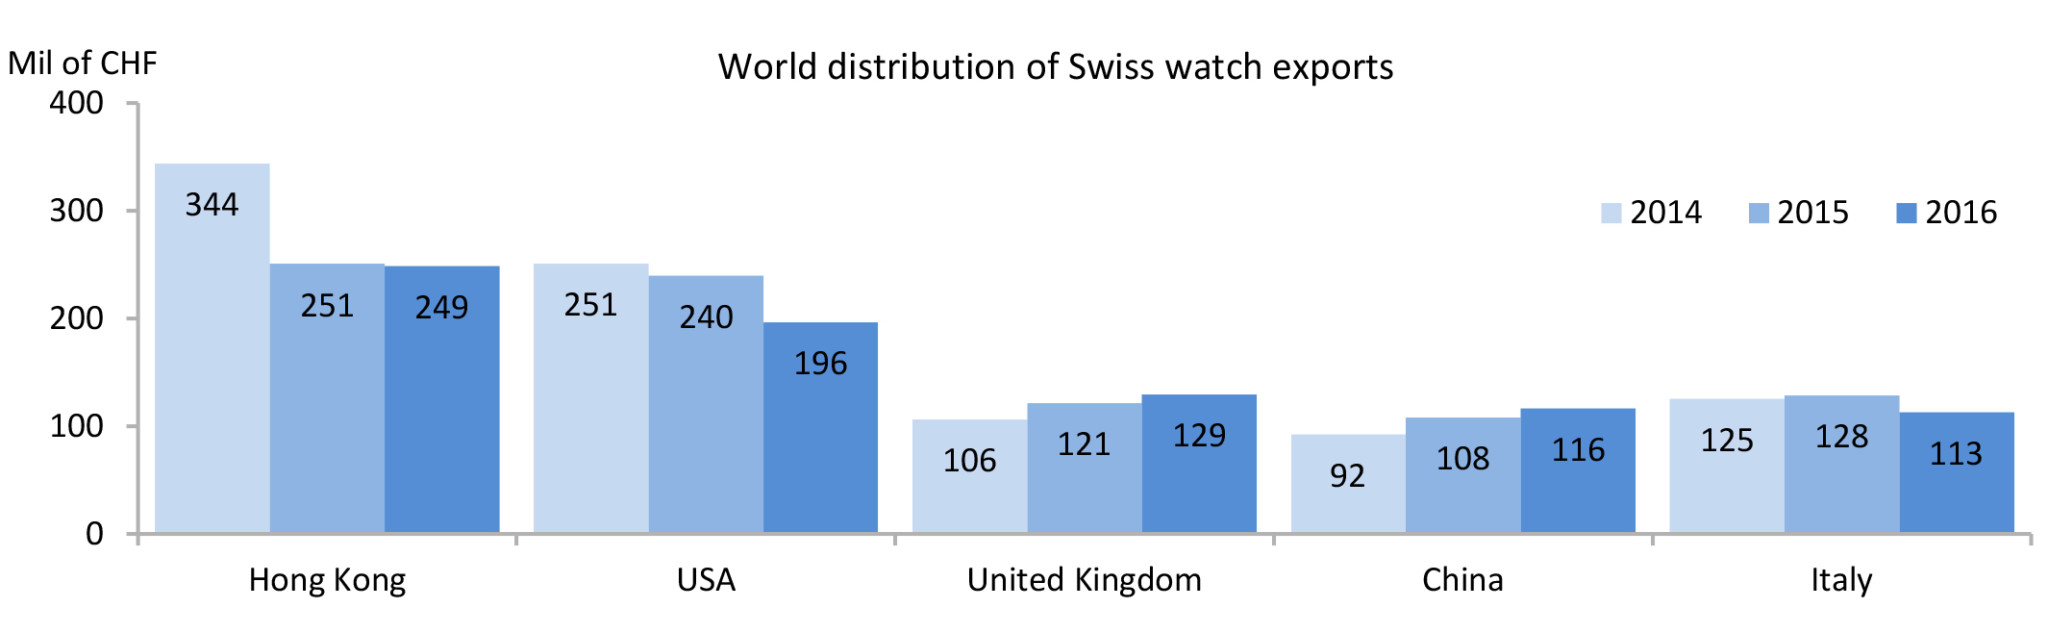 World distribution of swiss watch exports (nov 2016)